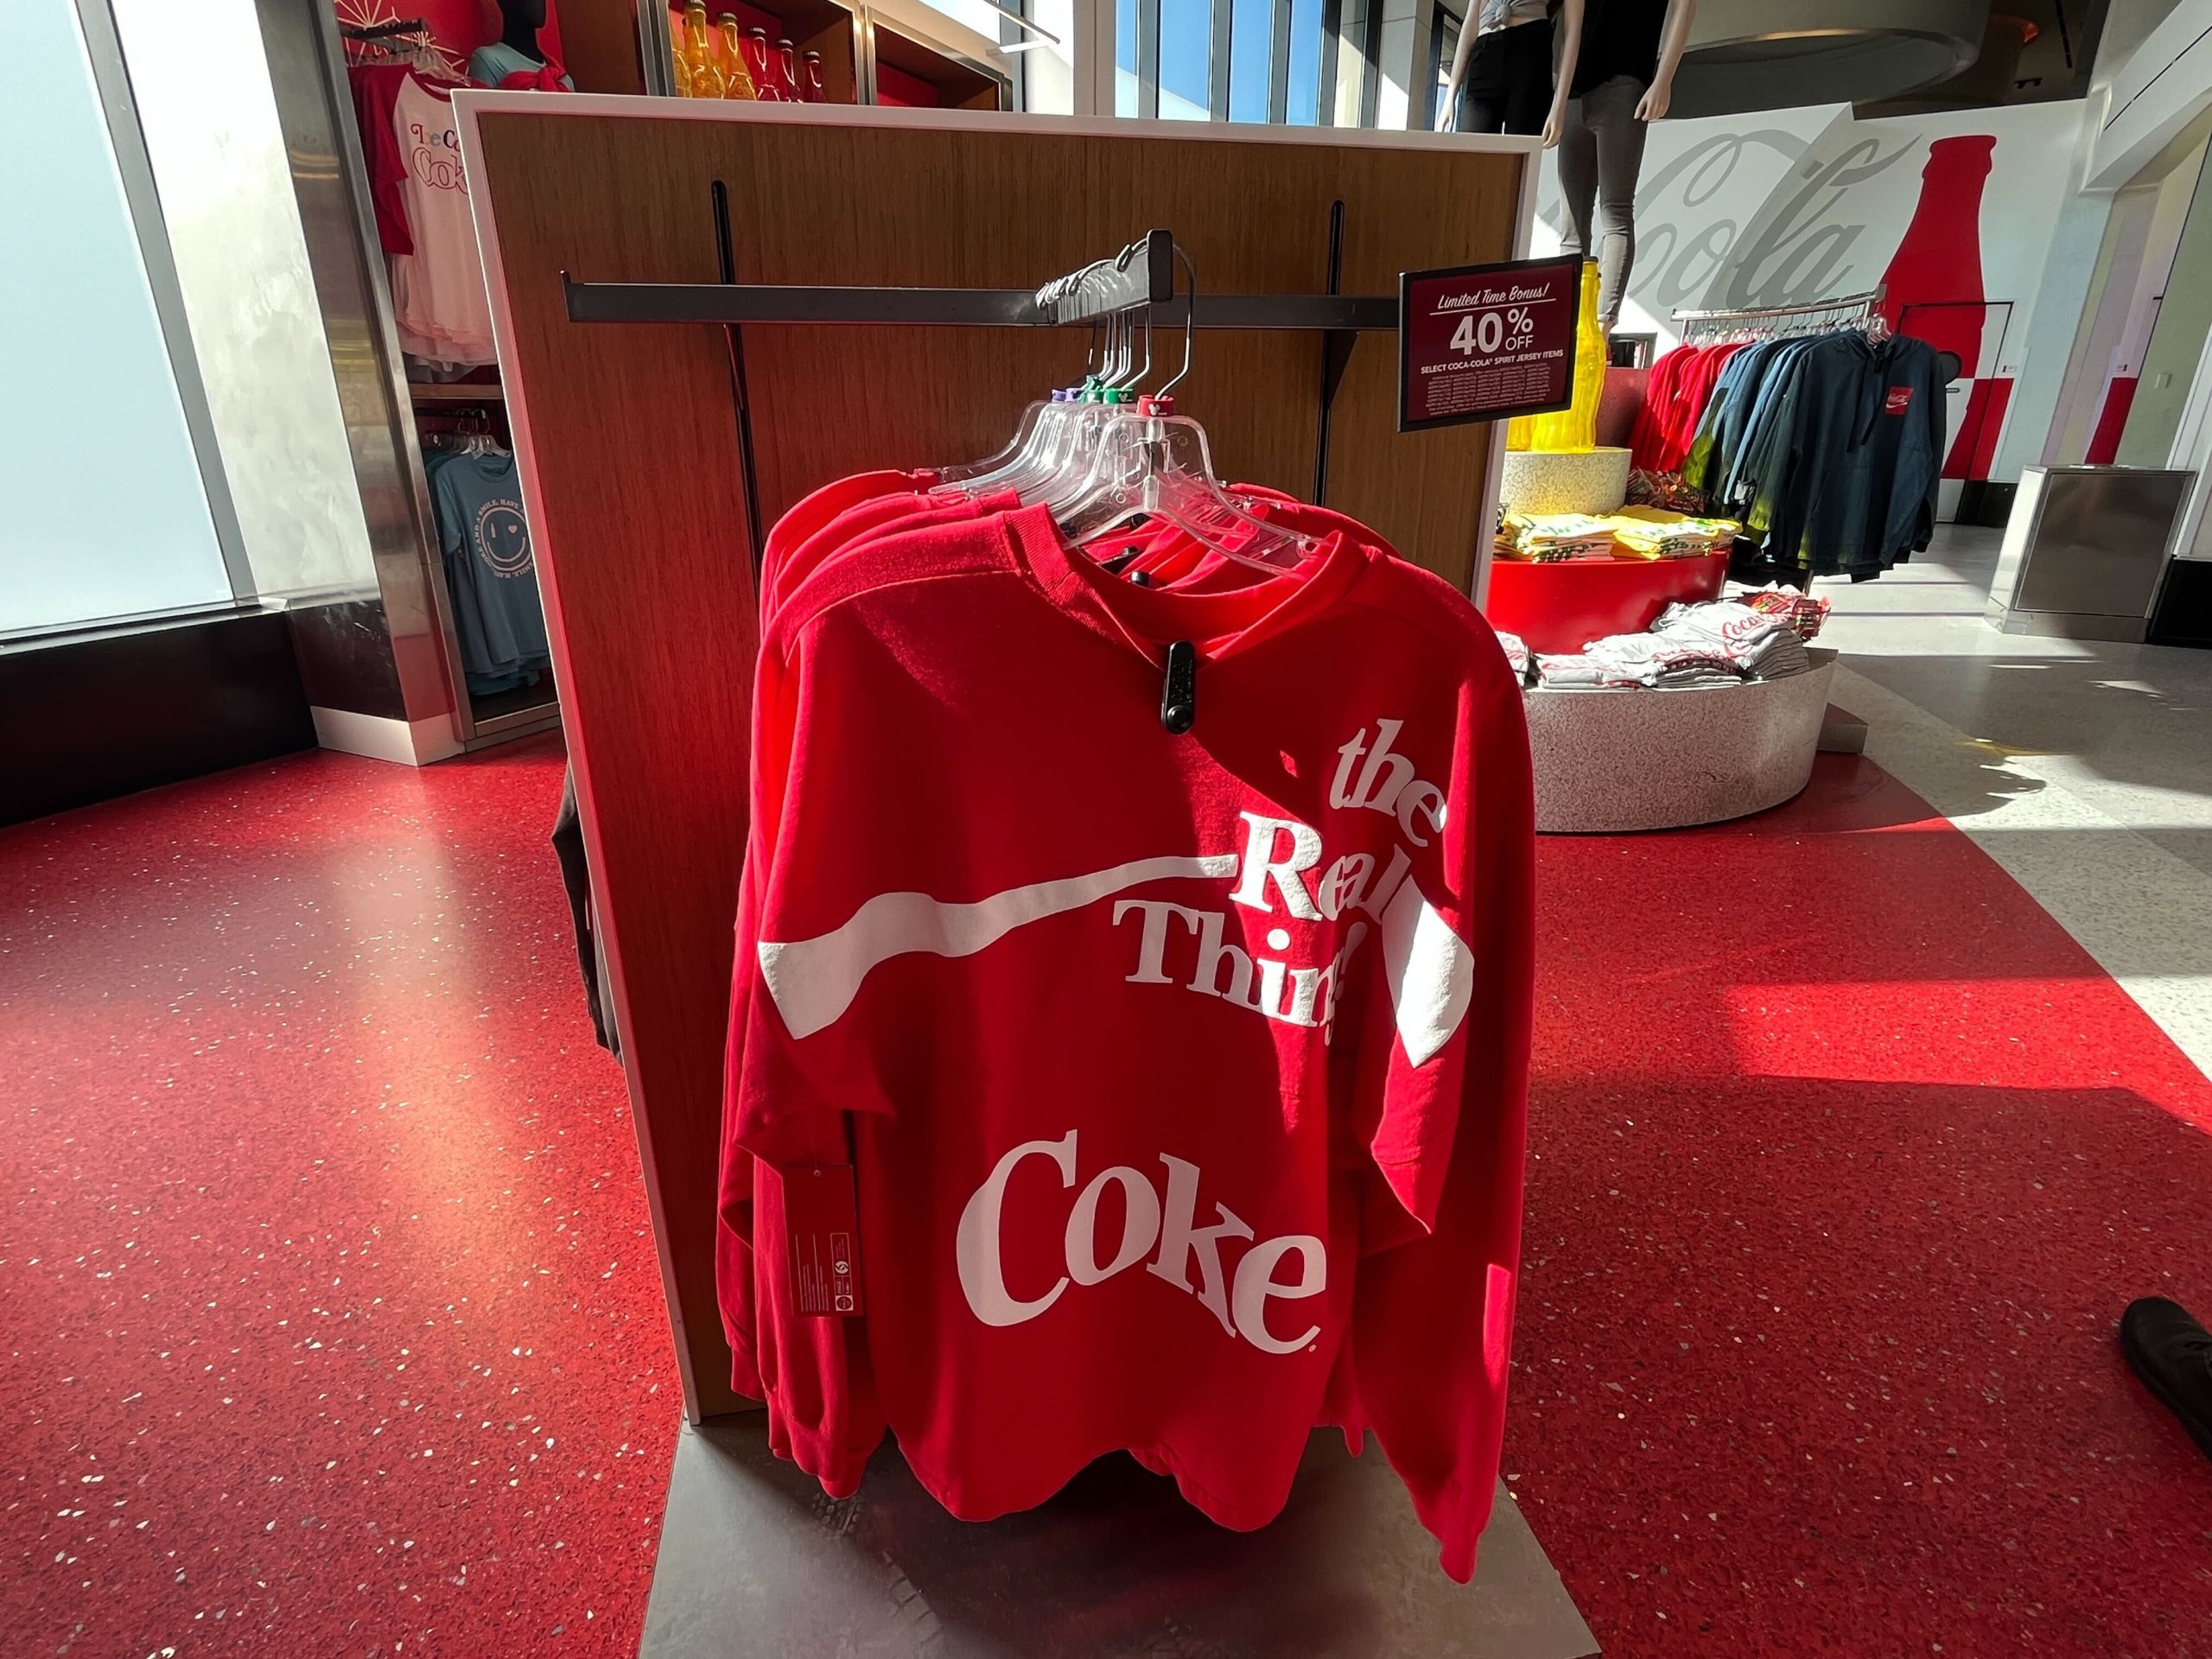 club cool coke spirit jersey sale